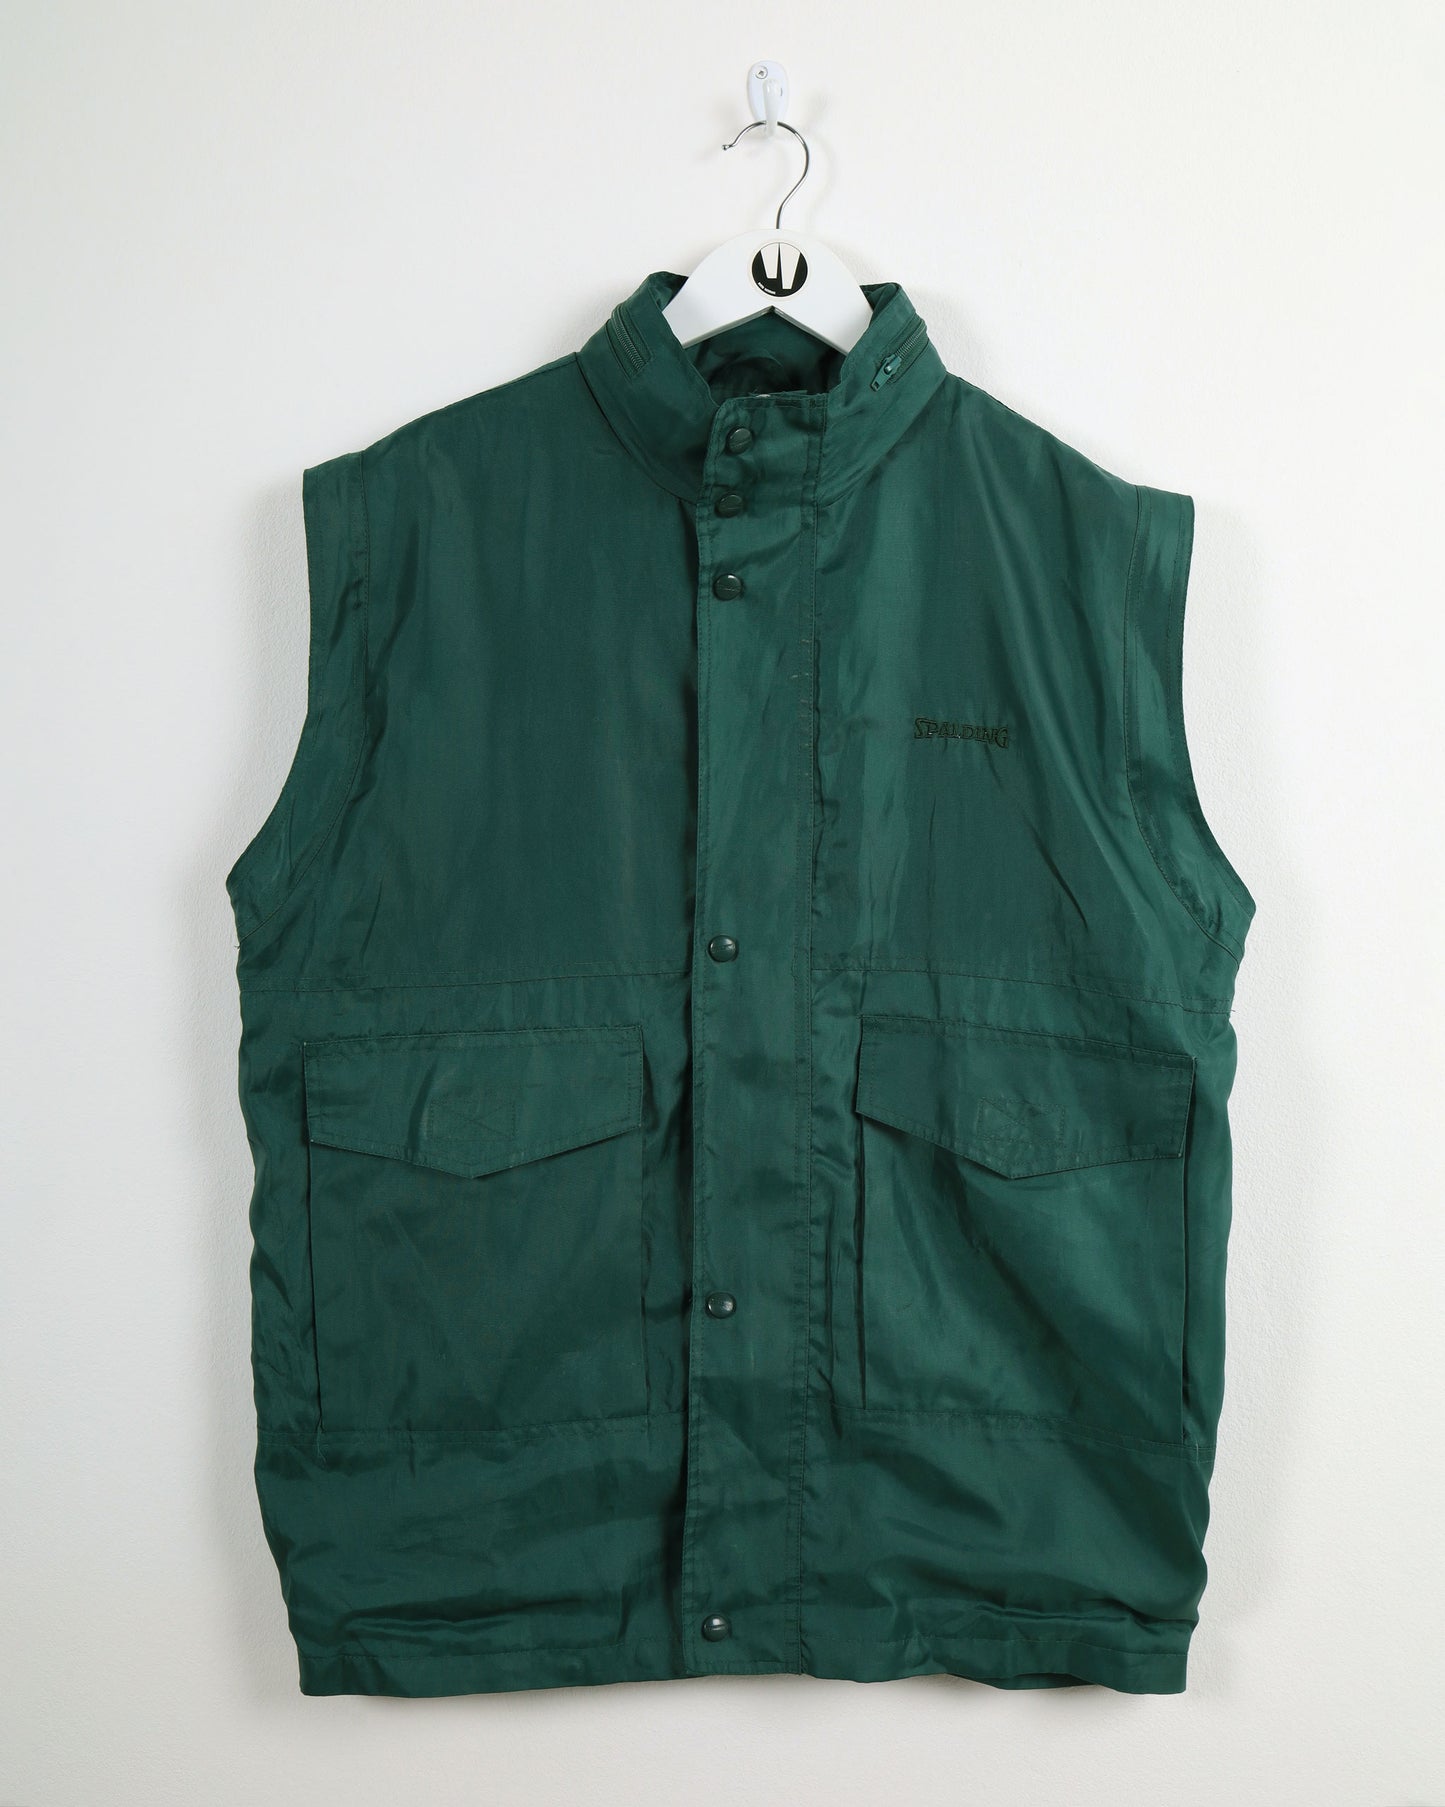 Vintage Spalding Convertible Jacket/Gilet Green